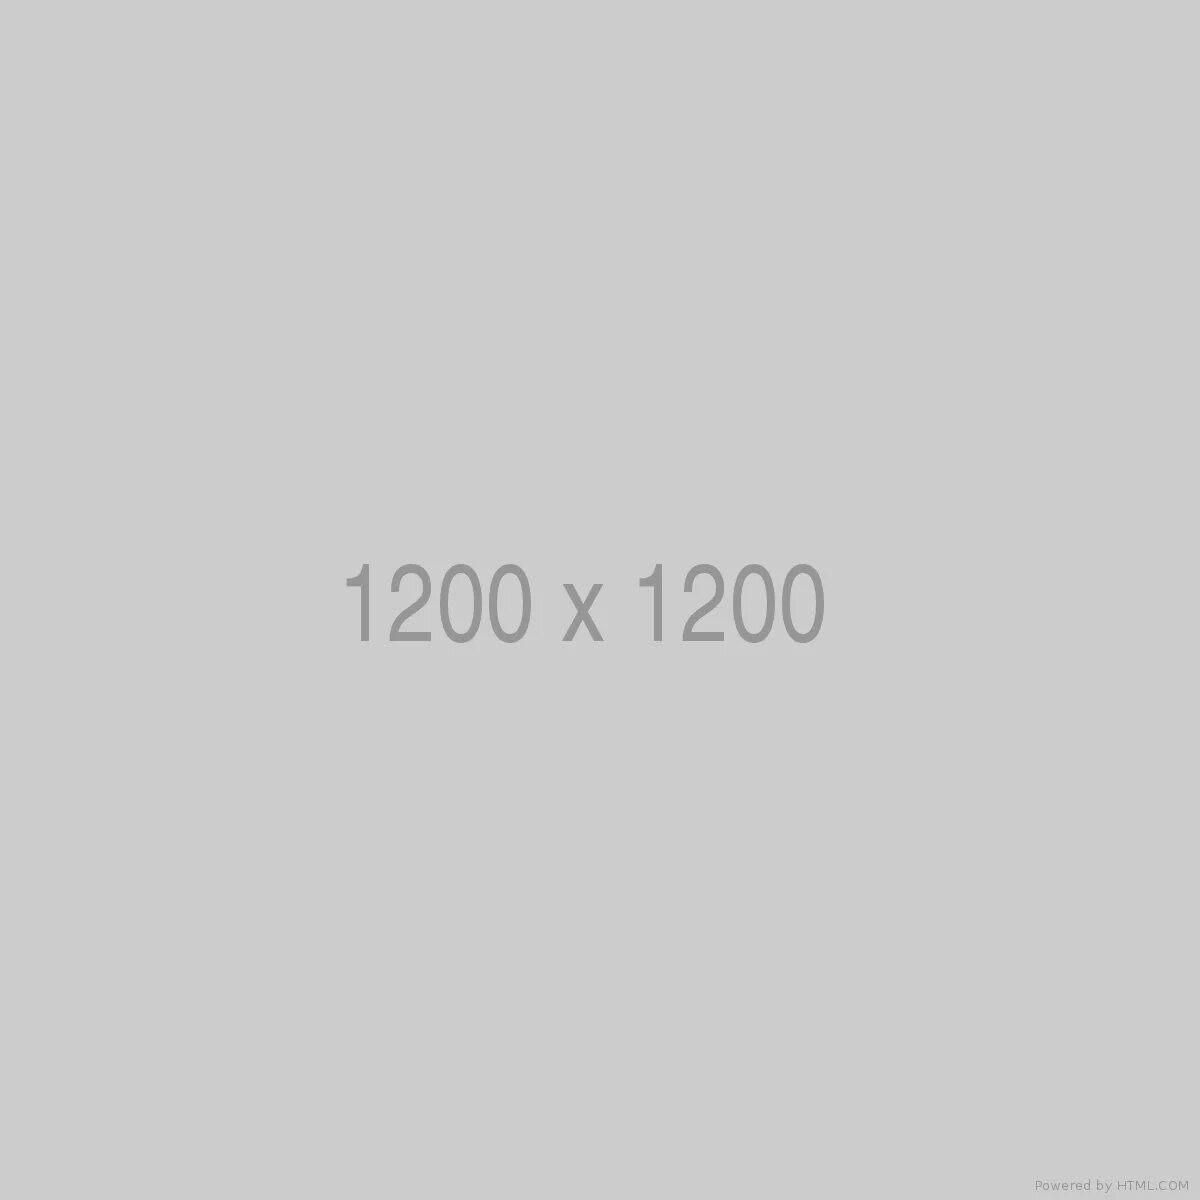 Лист 10 200 200. 200 На 200. 200 На 200 пикселей. Изображение 200x200. 200x200 картинки.